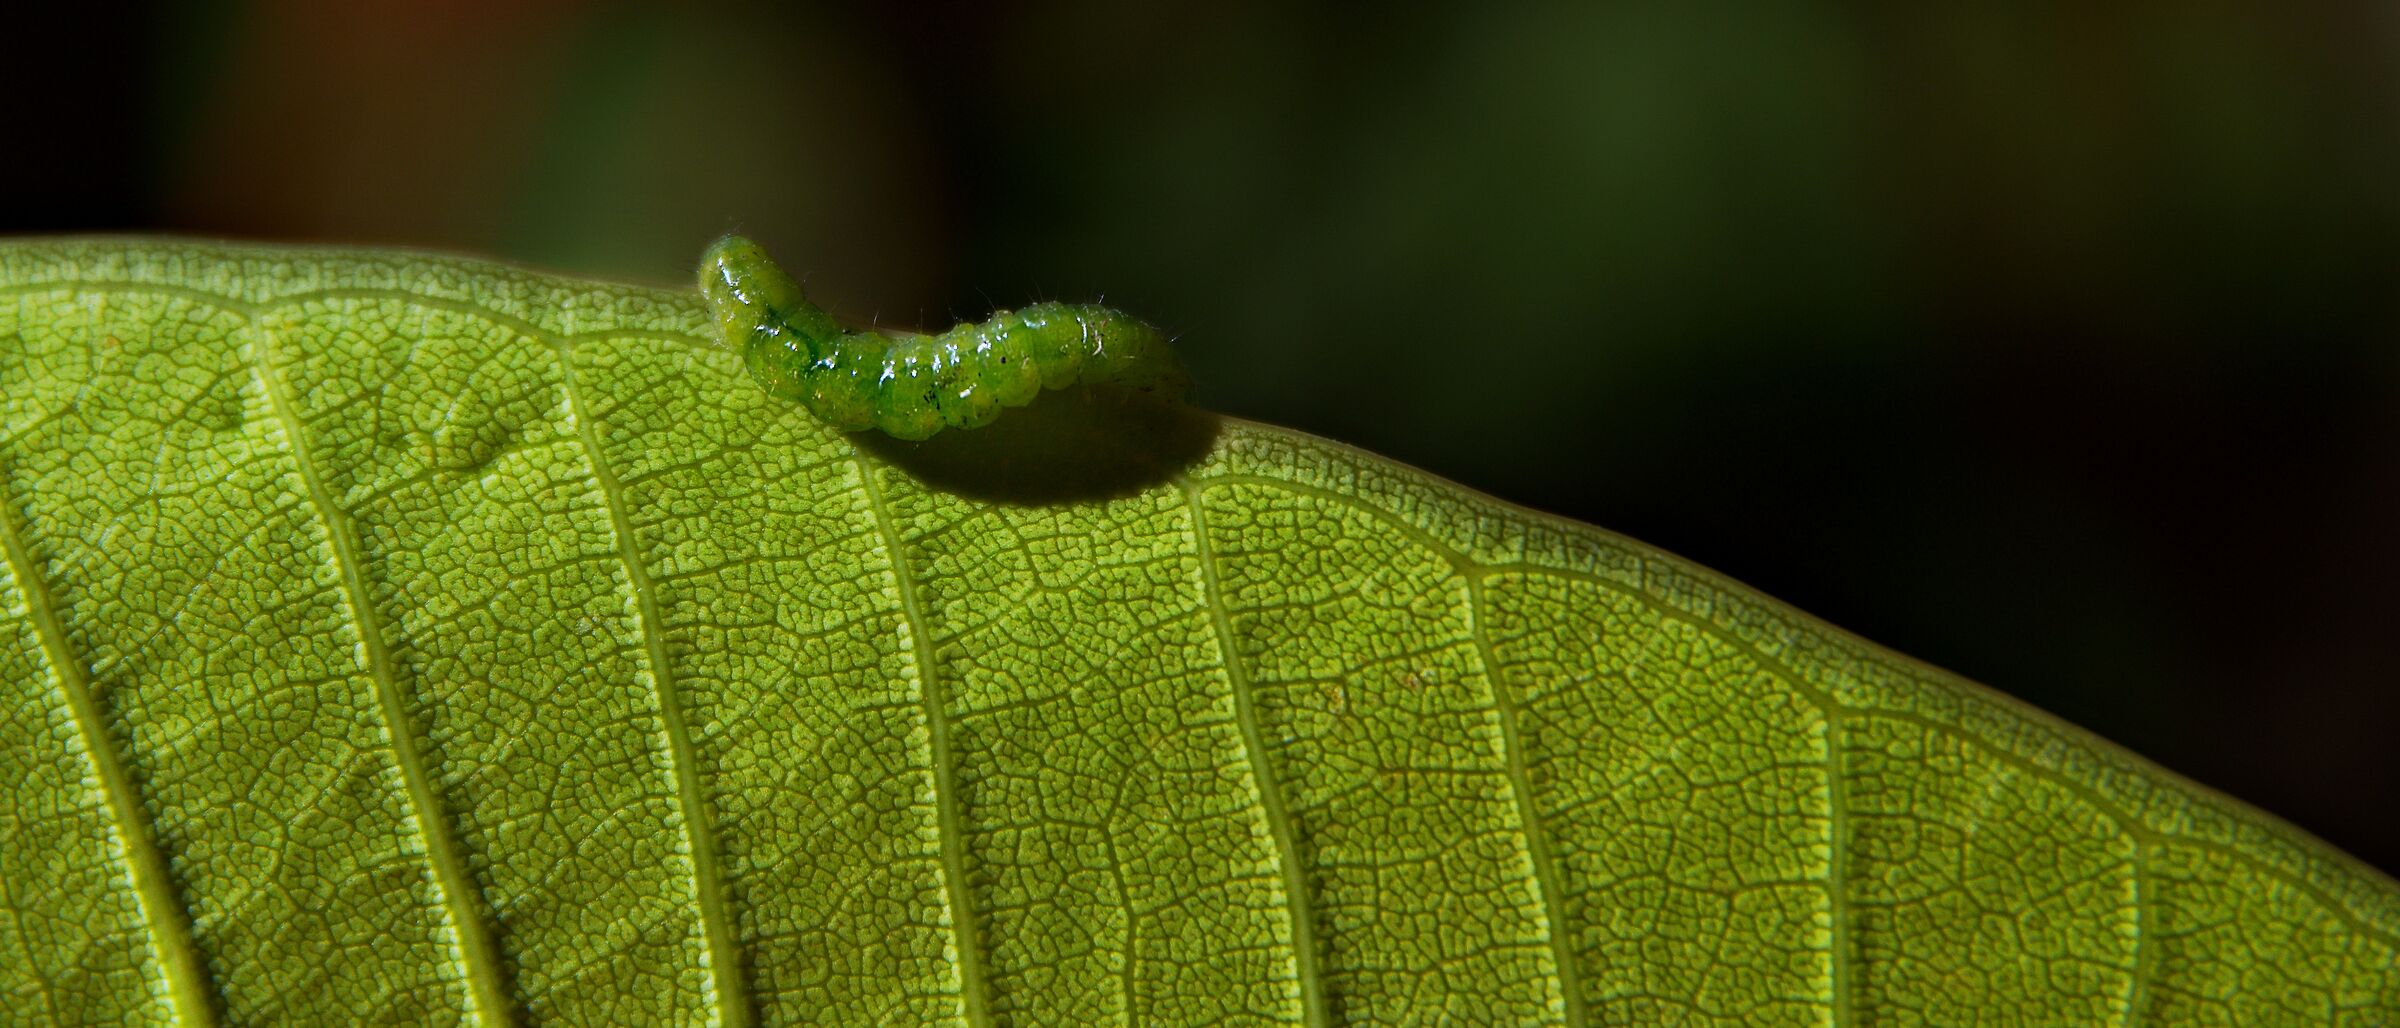 The plot of the caterpillar...